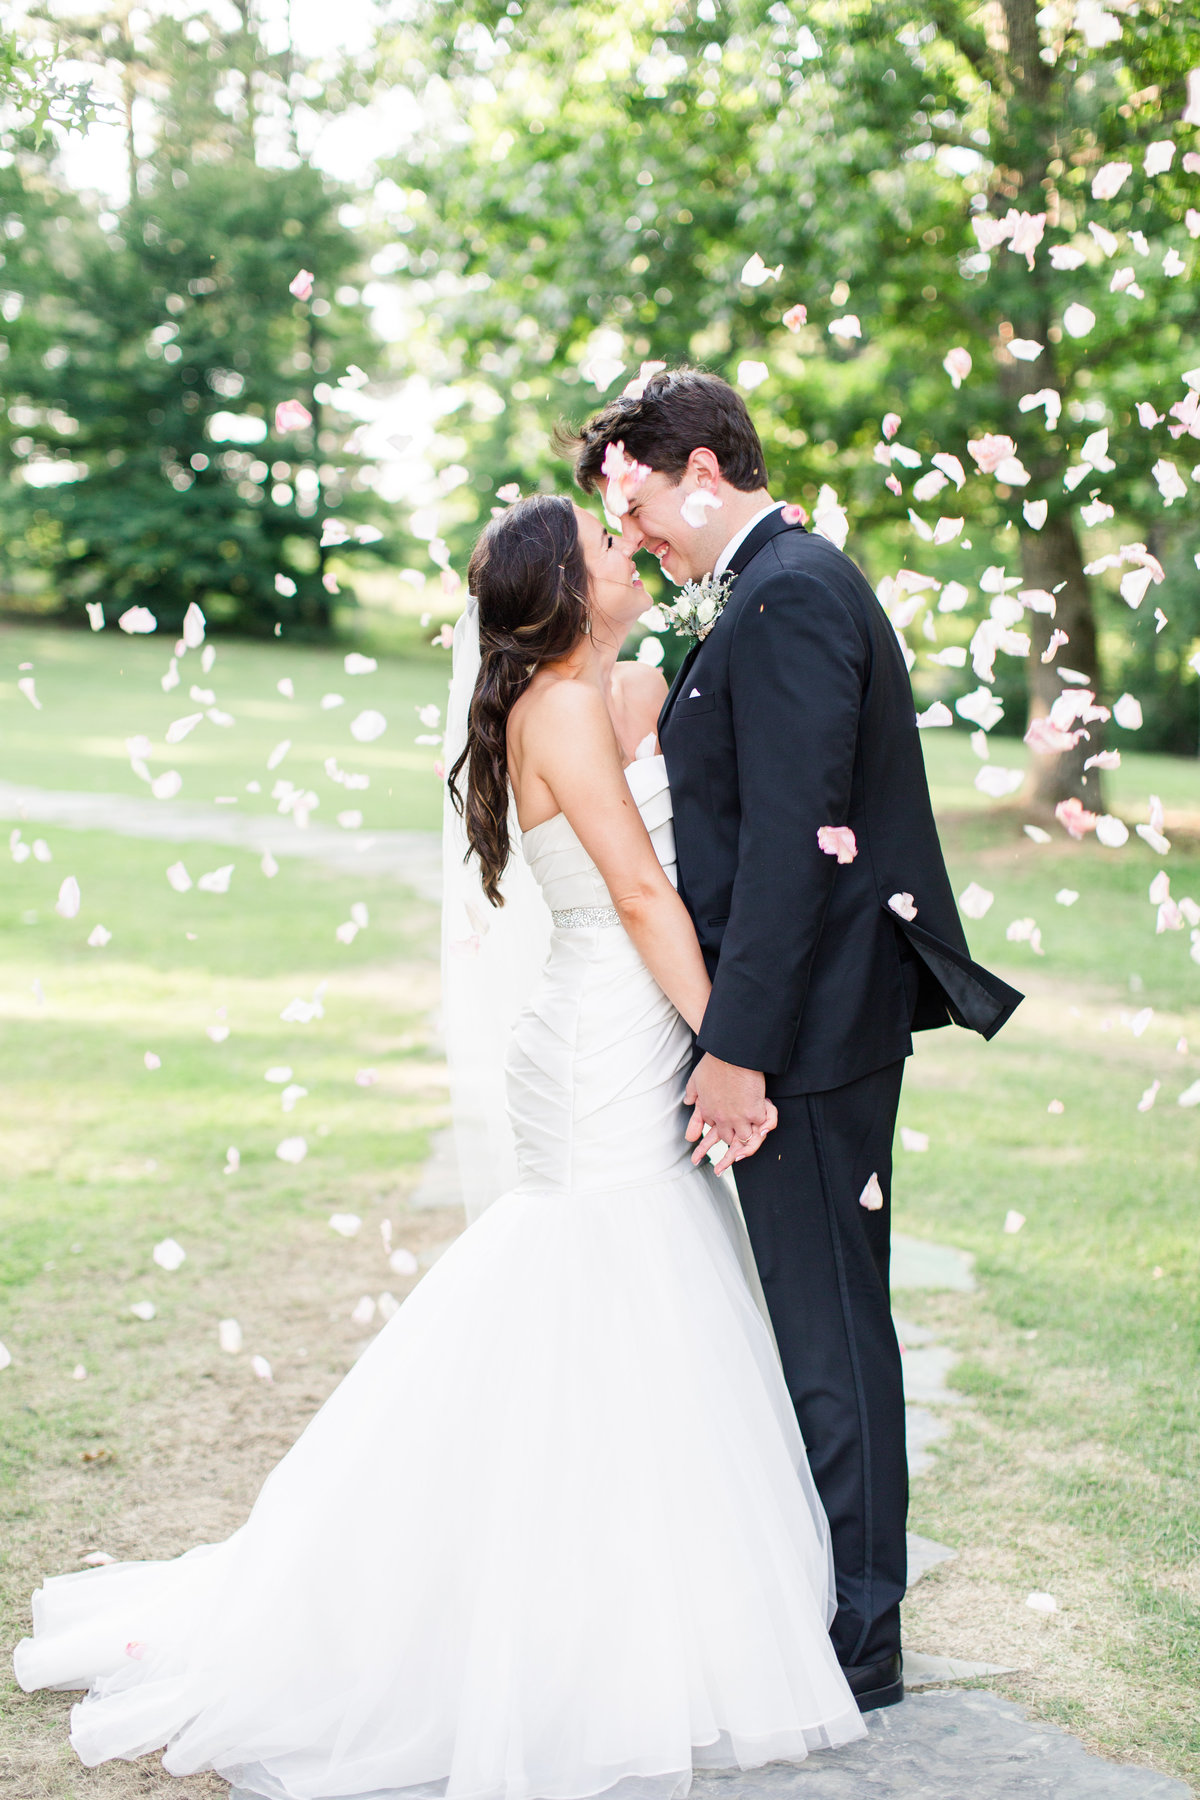 Bride and groom kissing under rose petals at The Barn at Shady Lane in Birmingham, Alabama